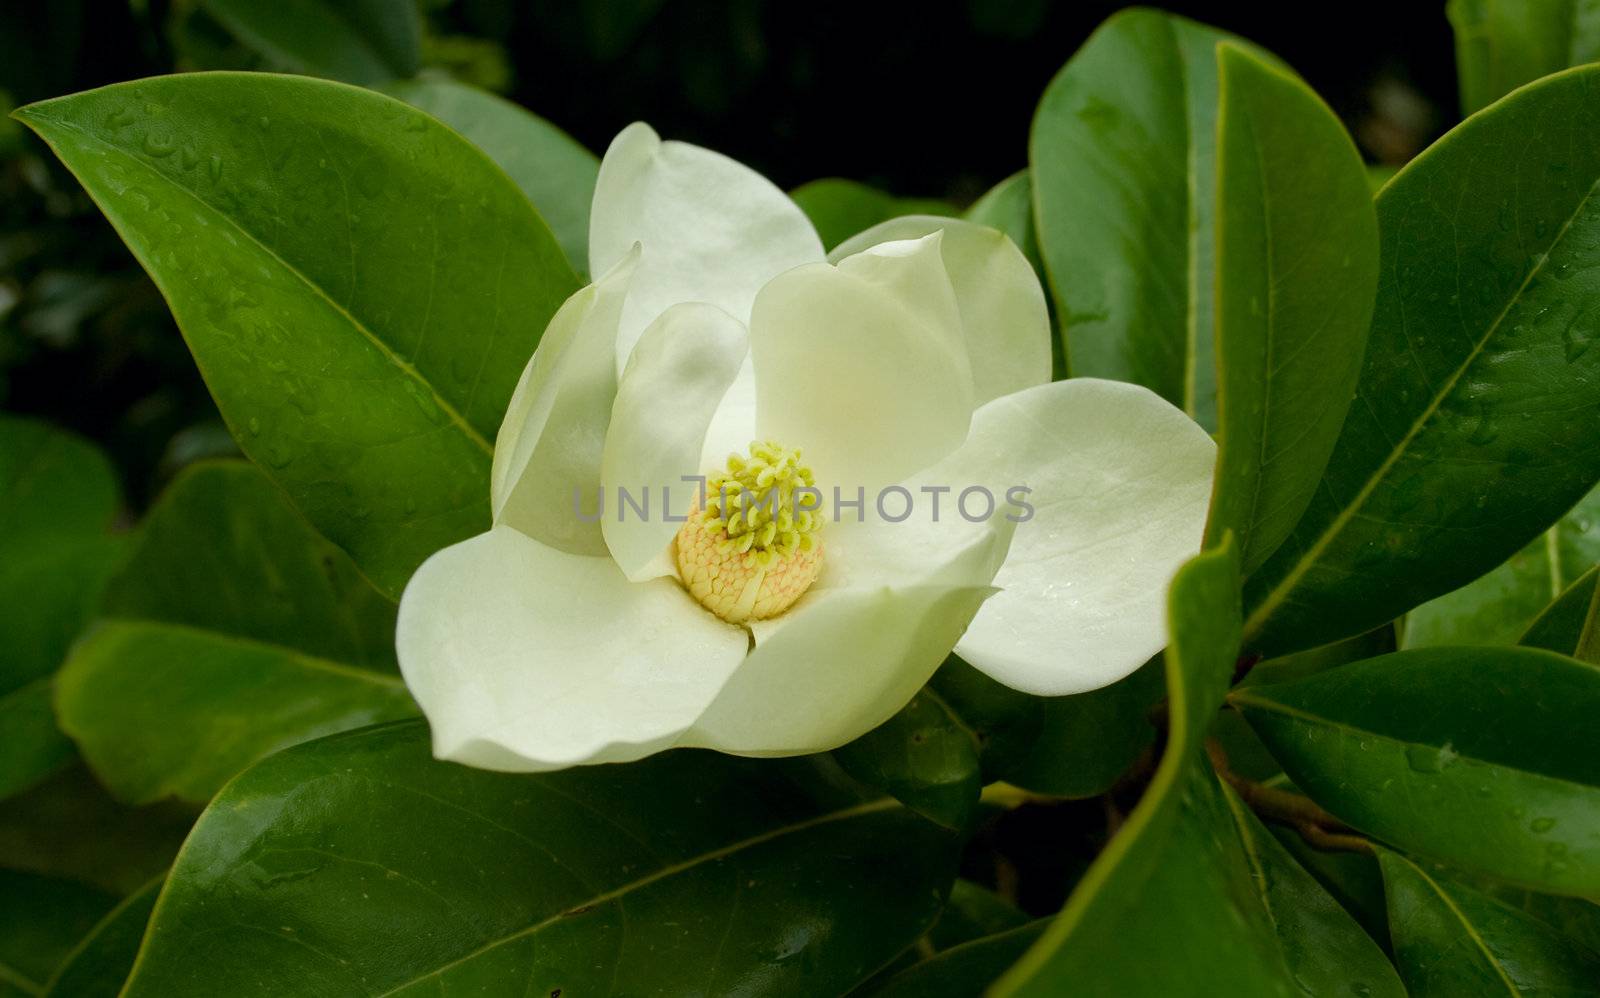 Magnolia flower by Kriblikrabli